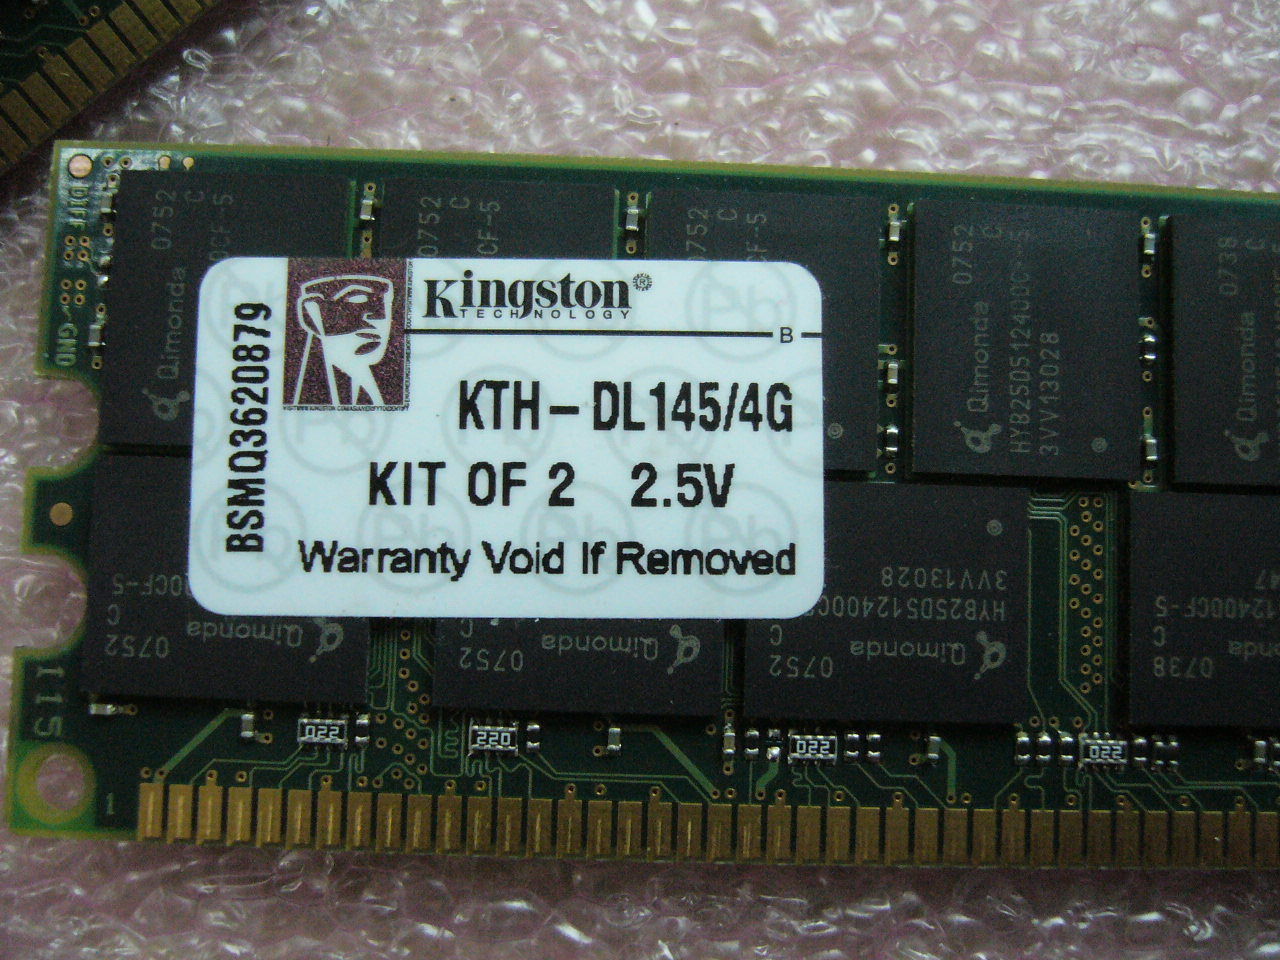 QTY 1x 2GB Module Kingston KTH-DL145/4G PC-2700R ECC Registered Server memory - Click Image to Close